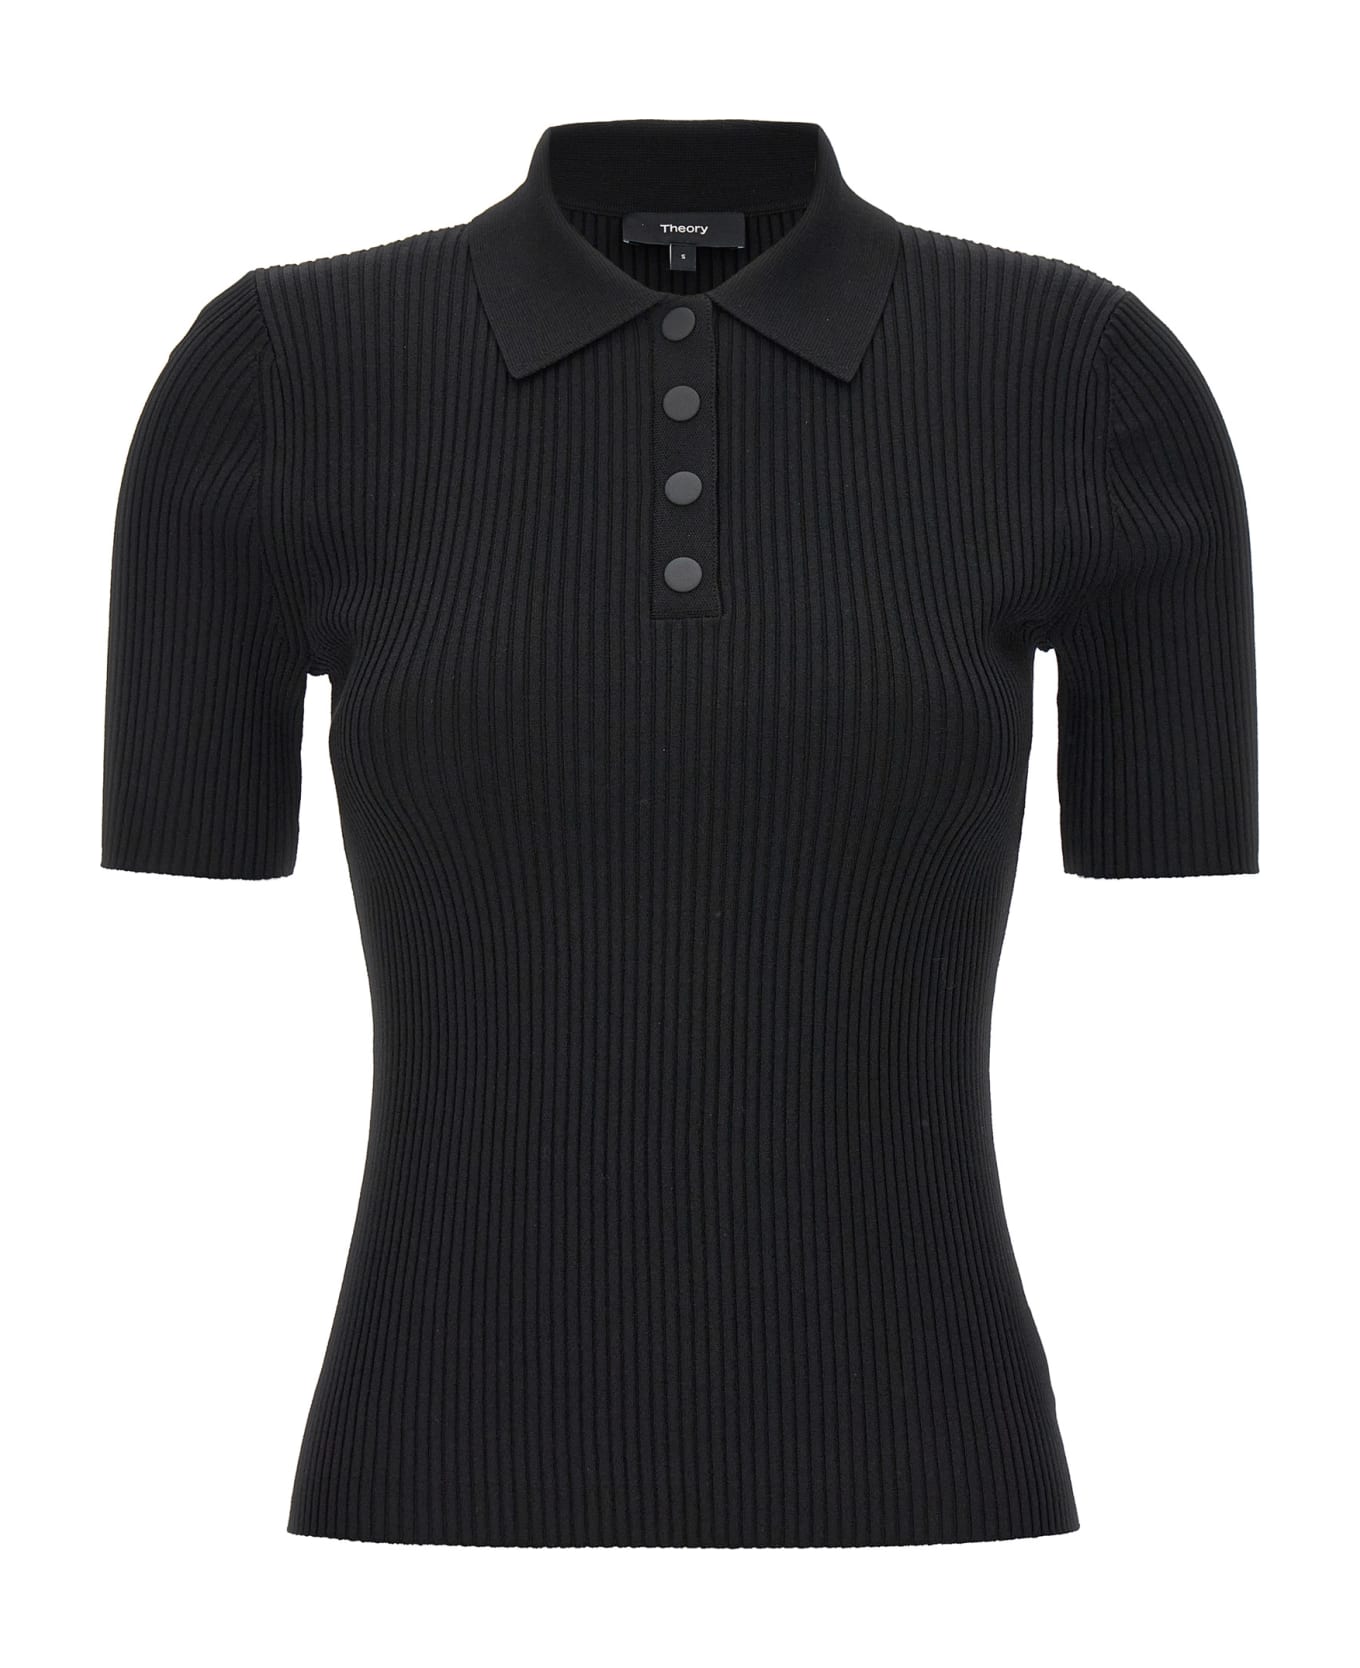 Theory Ribbed Polo Shirt - Black   ポロシャツ